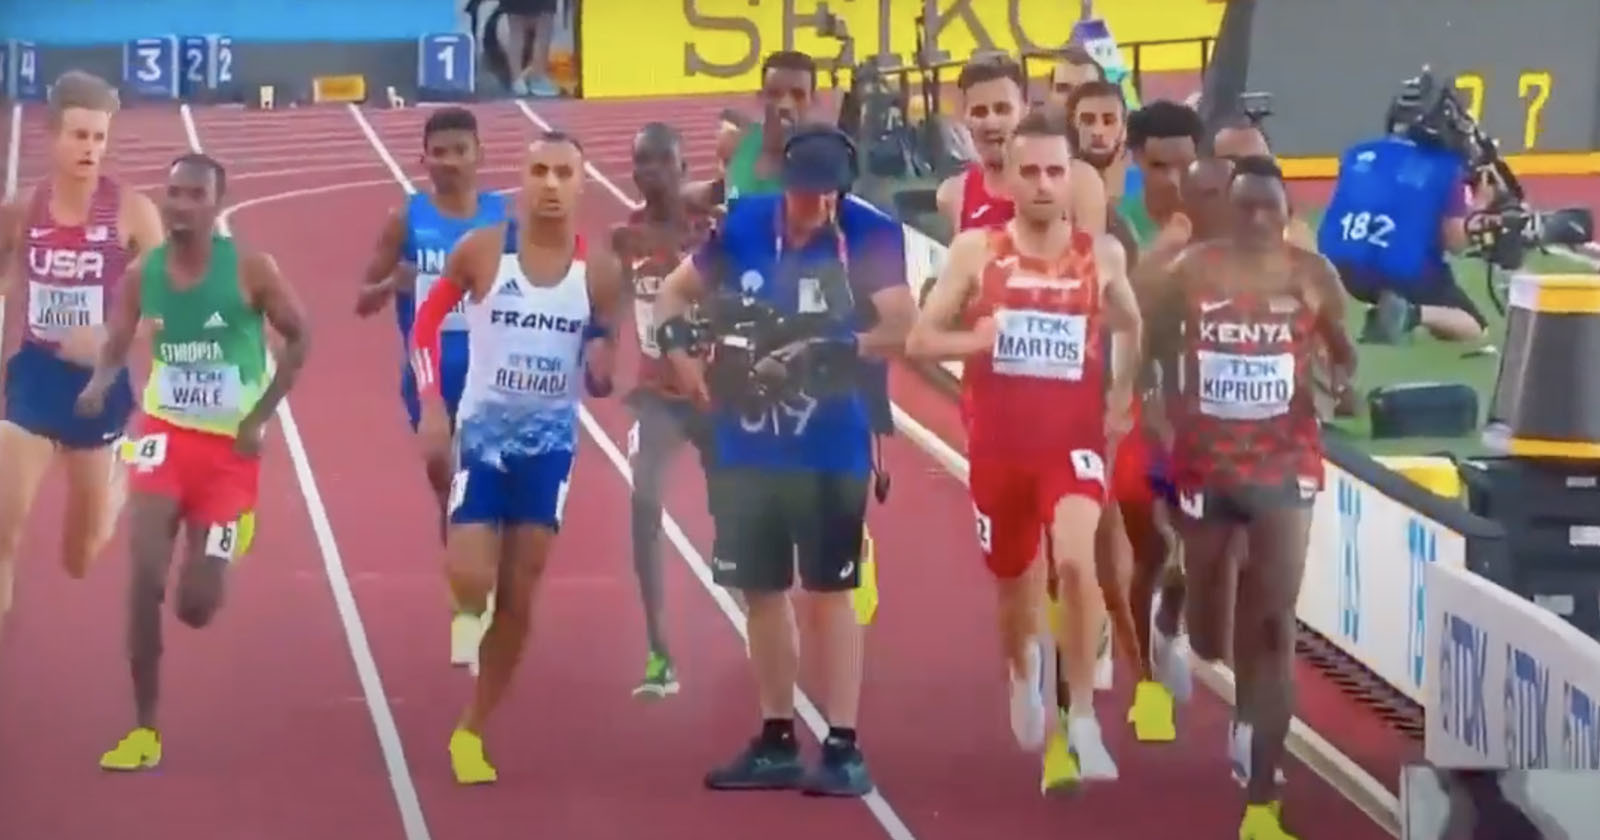 Clueless Cameraman Causes Chaos at World Athletics Championship